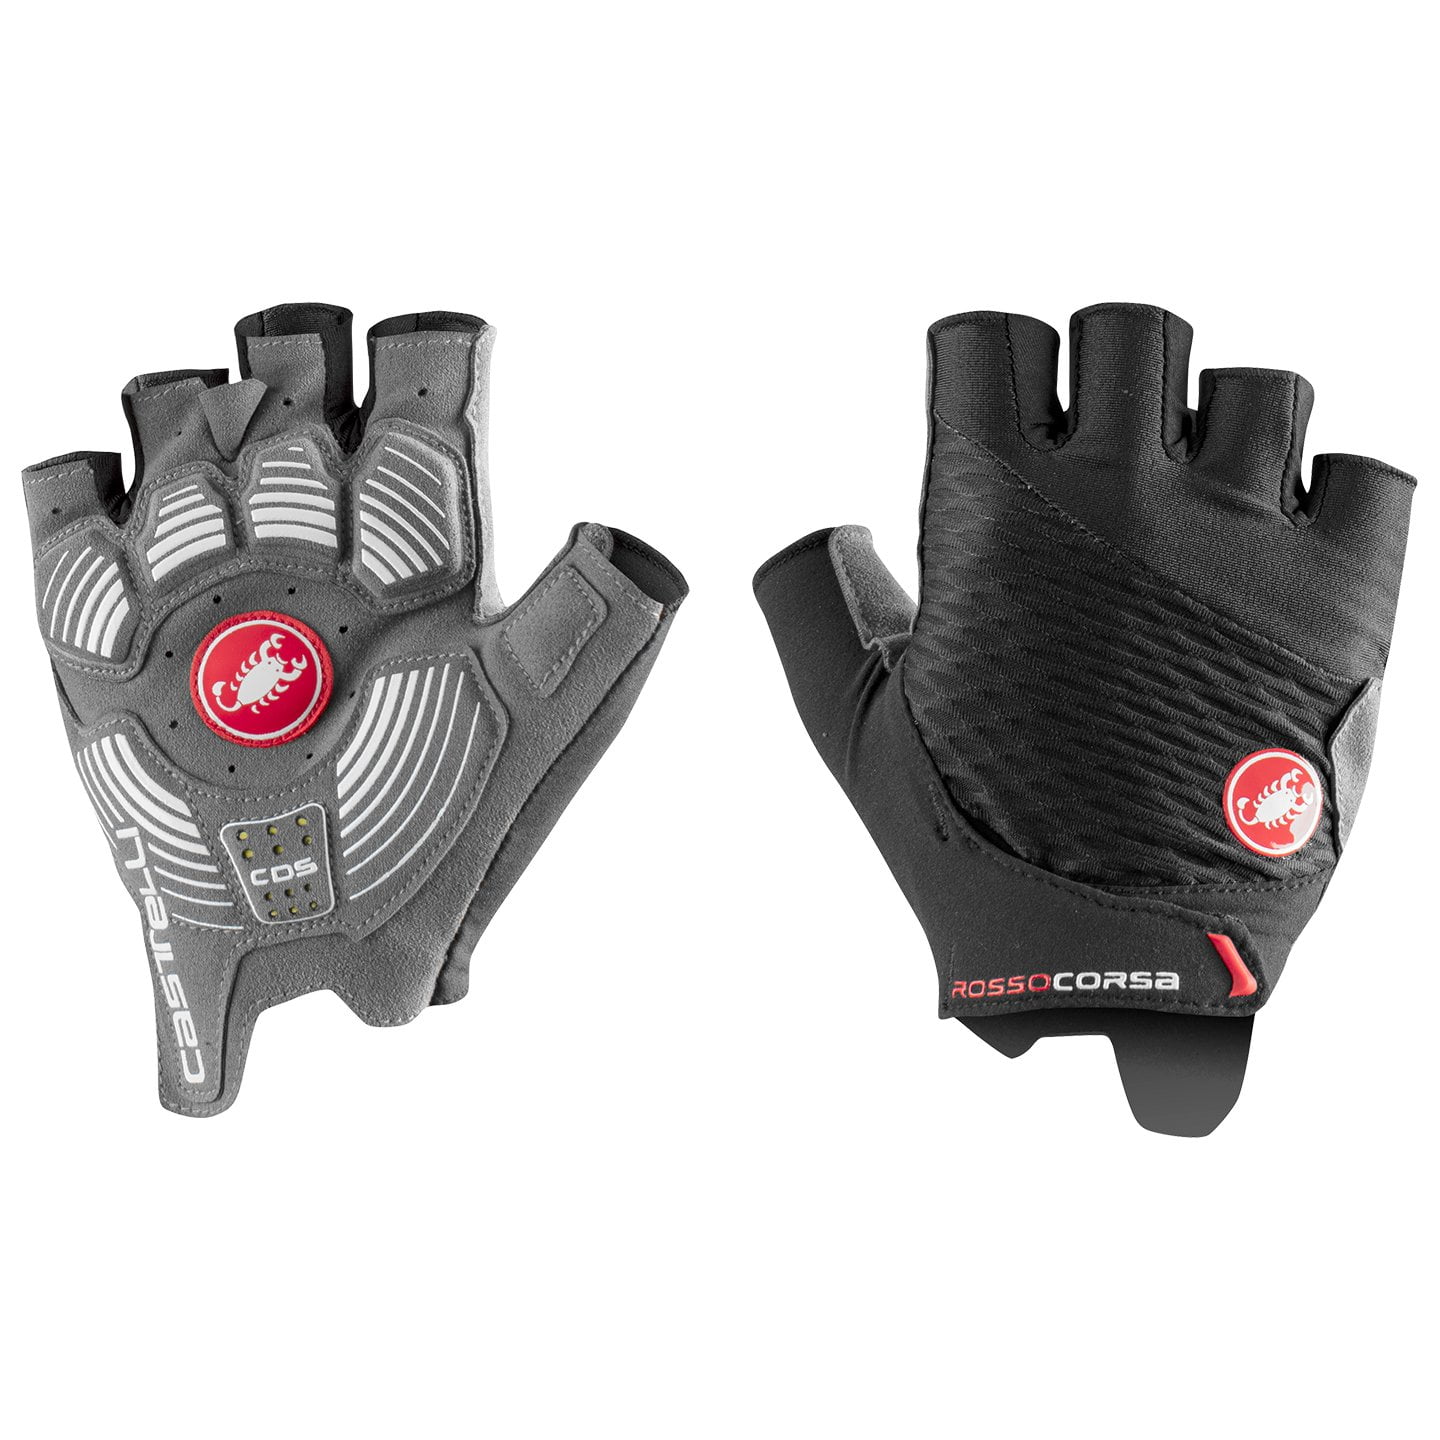 Rosso Corsa 2 Women’s Gloves Women’s Cycling Gloves, size M, Bike gloves, Bike clothing